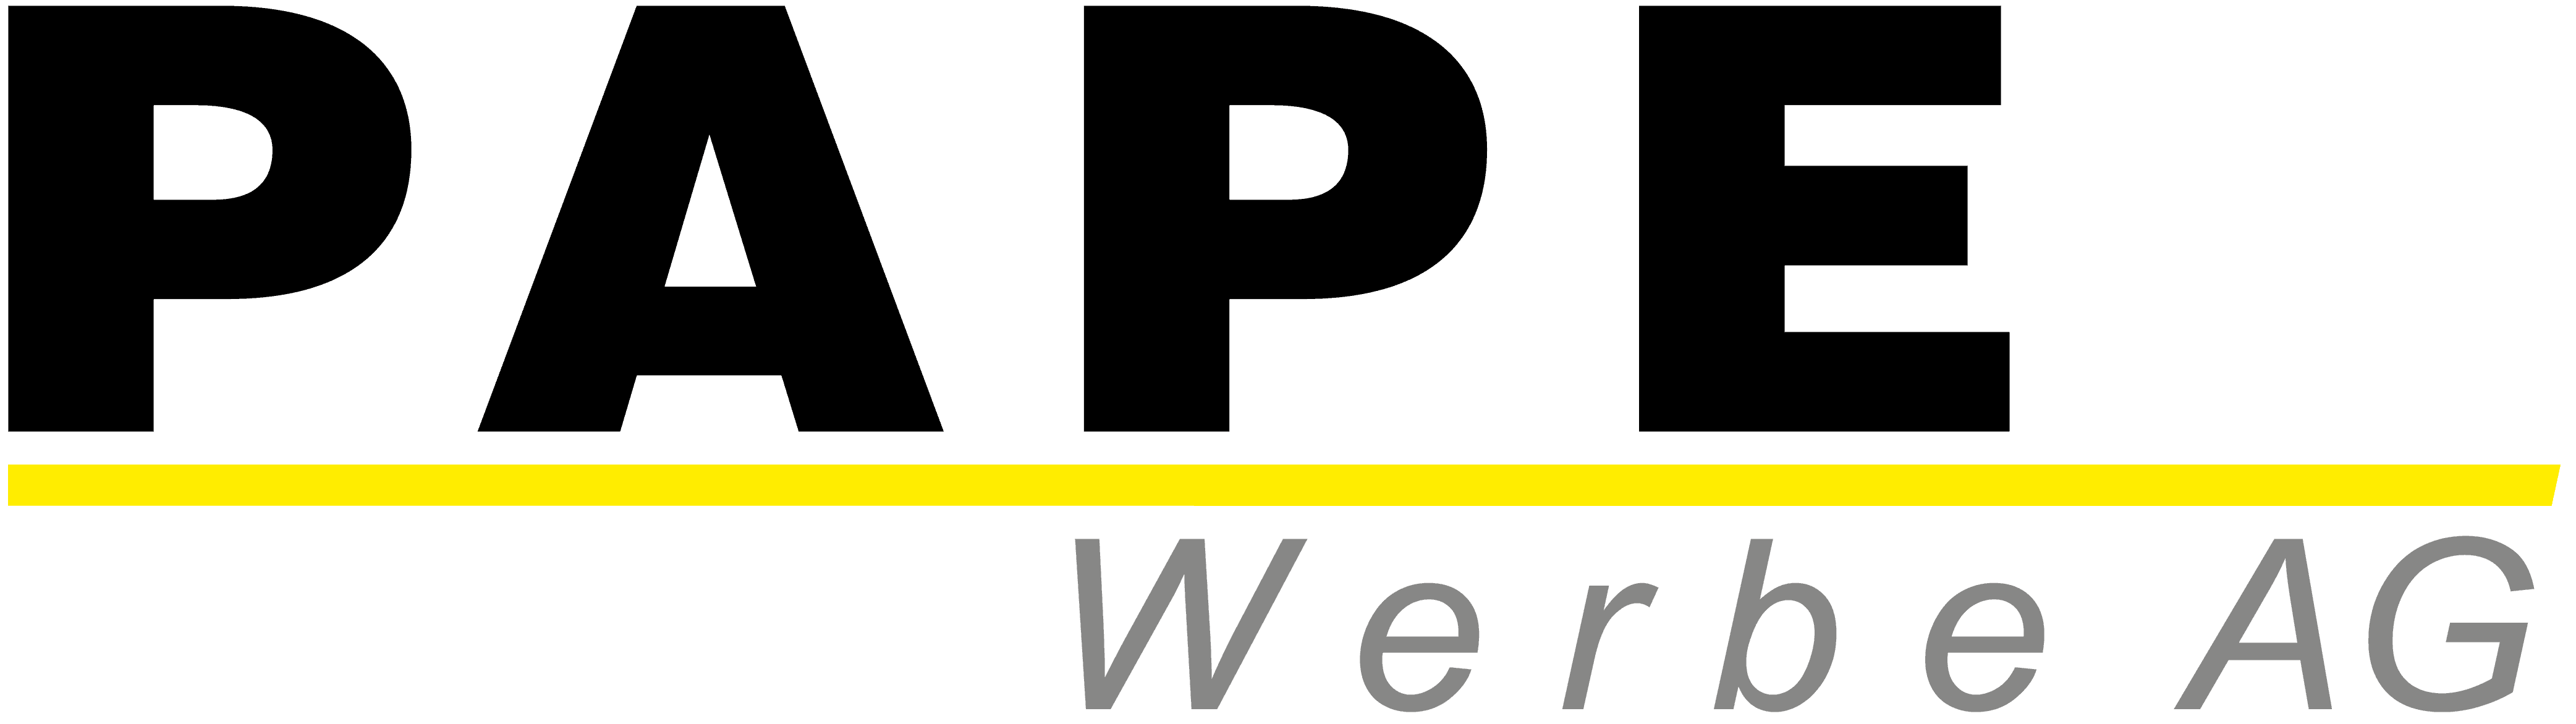 Pape Werbe AG Logo schwarz